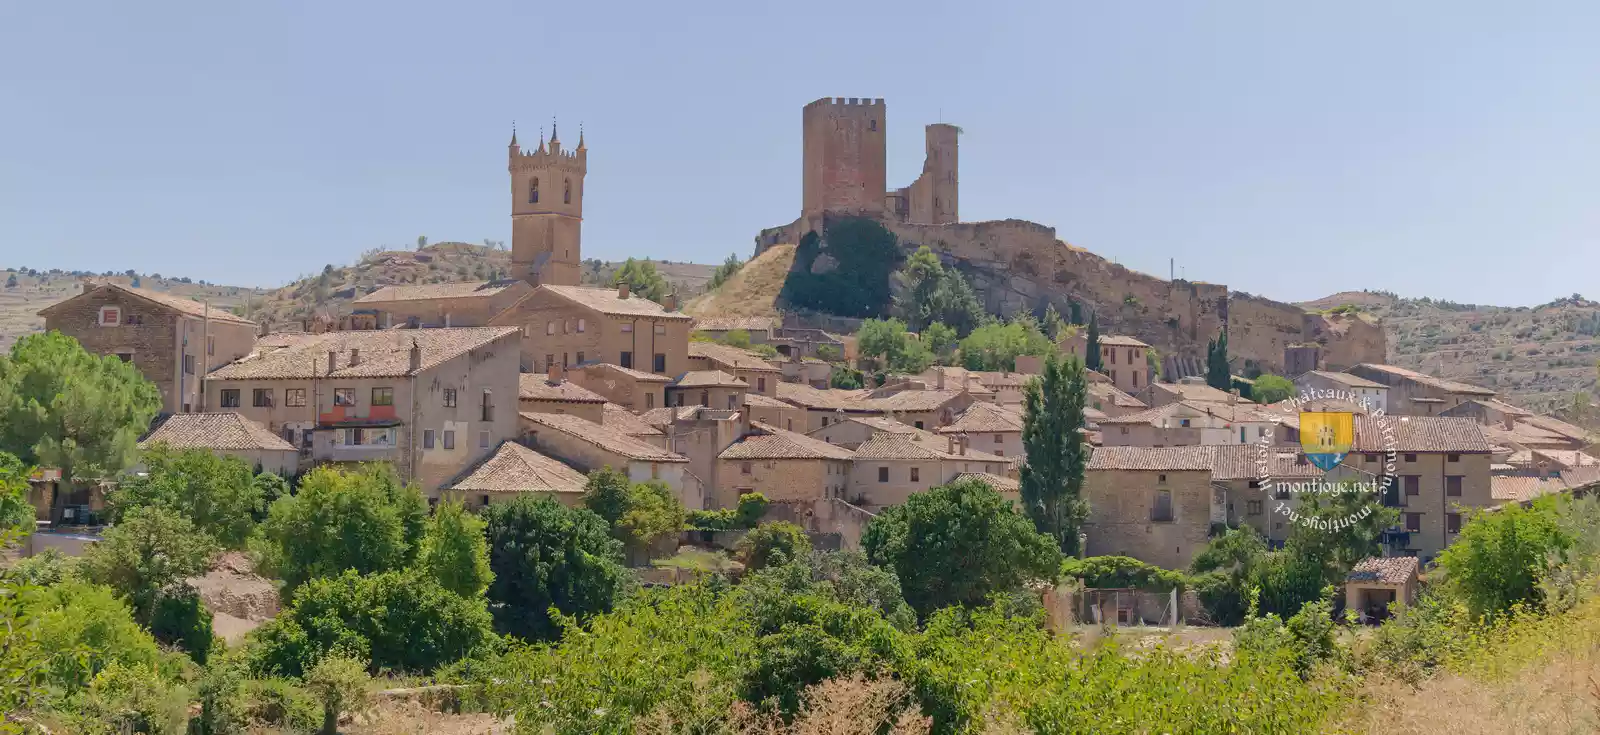 uncastillo village medieval